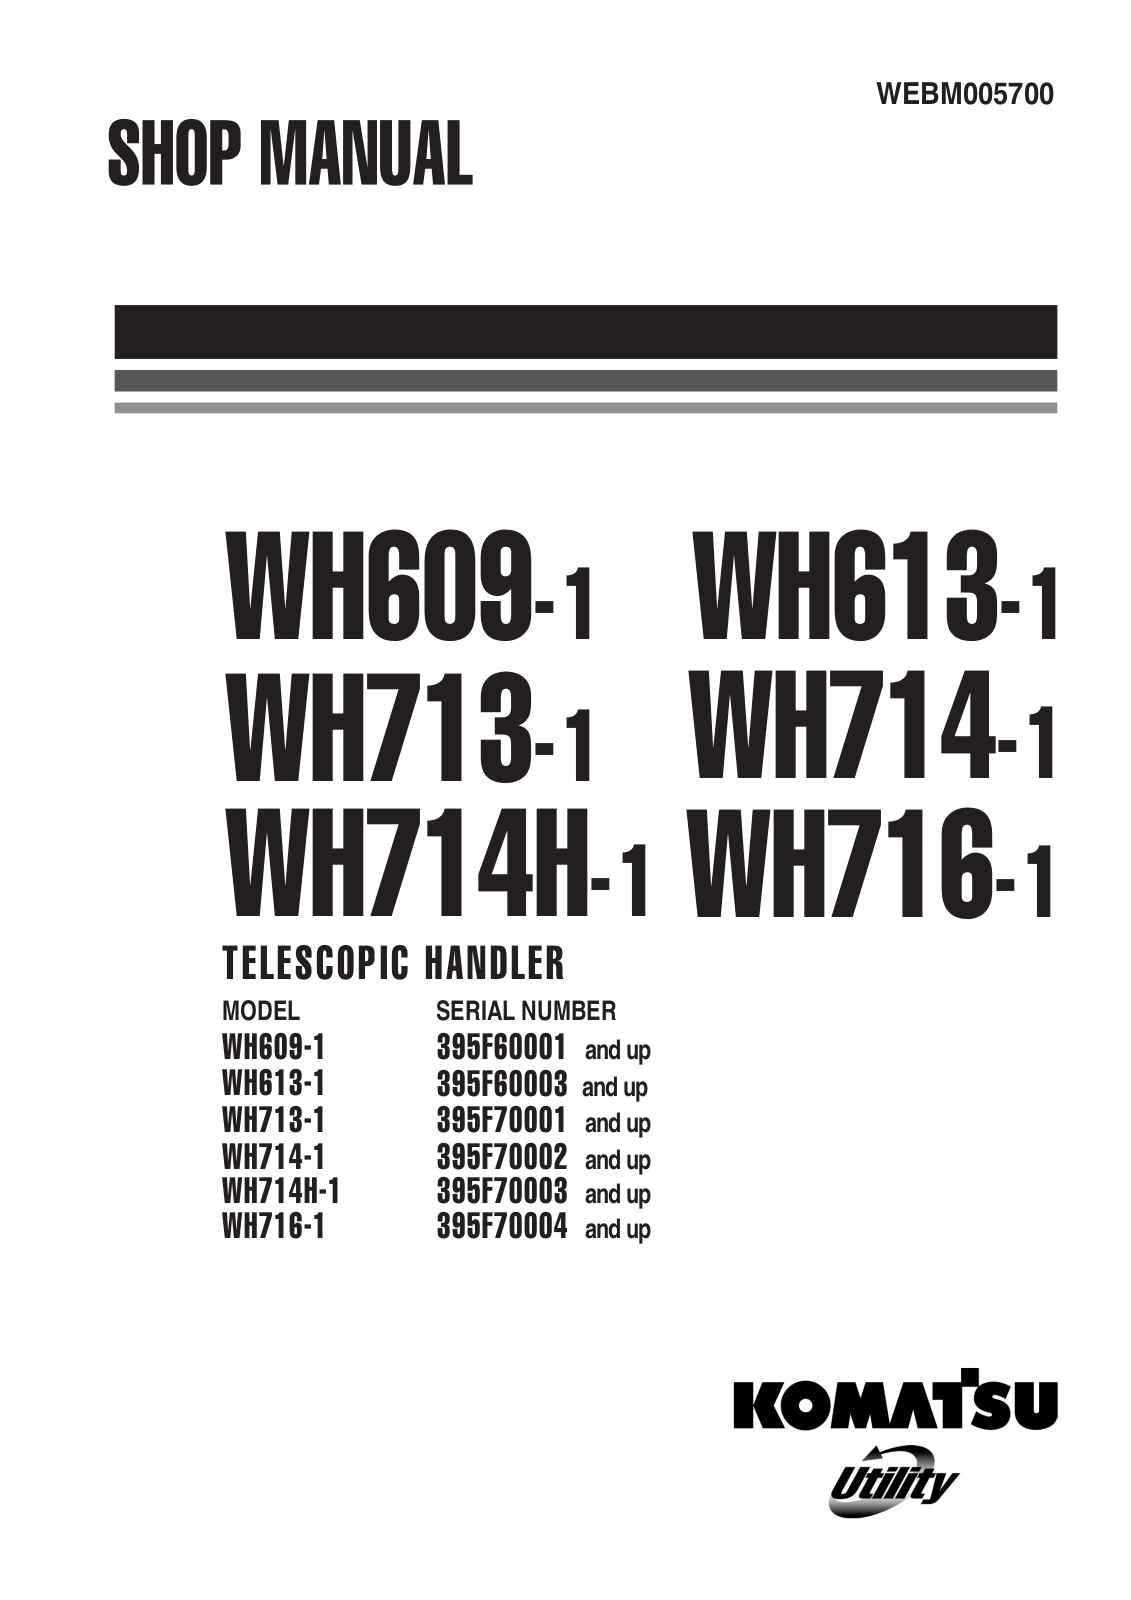 KOMATSU WH609, WH716-S SHOP MANUAL